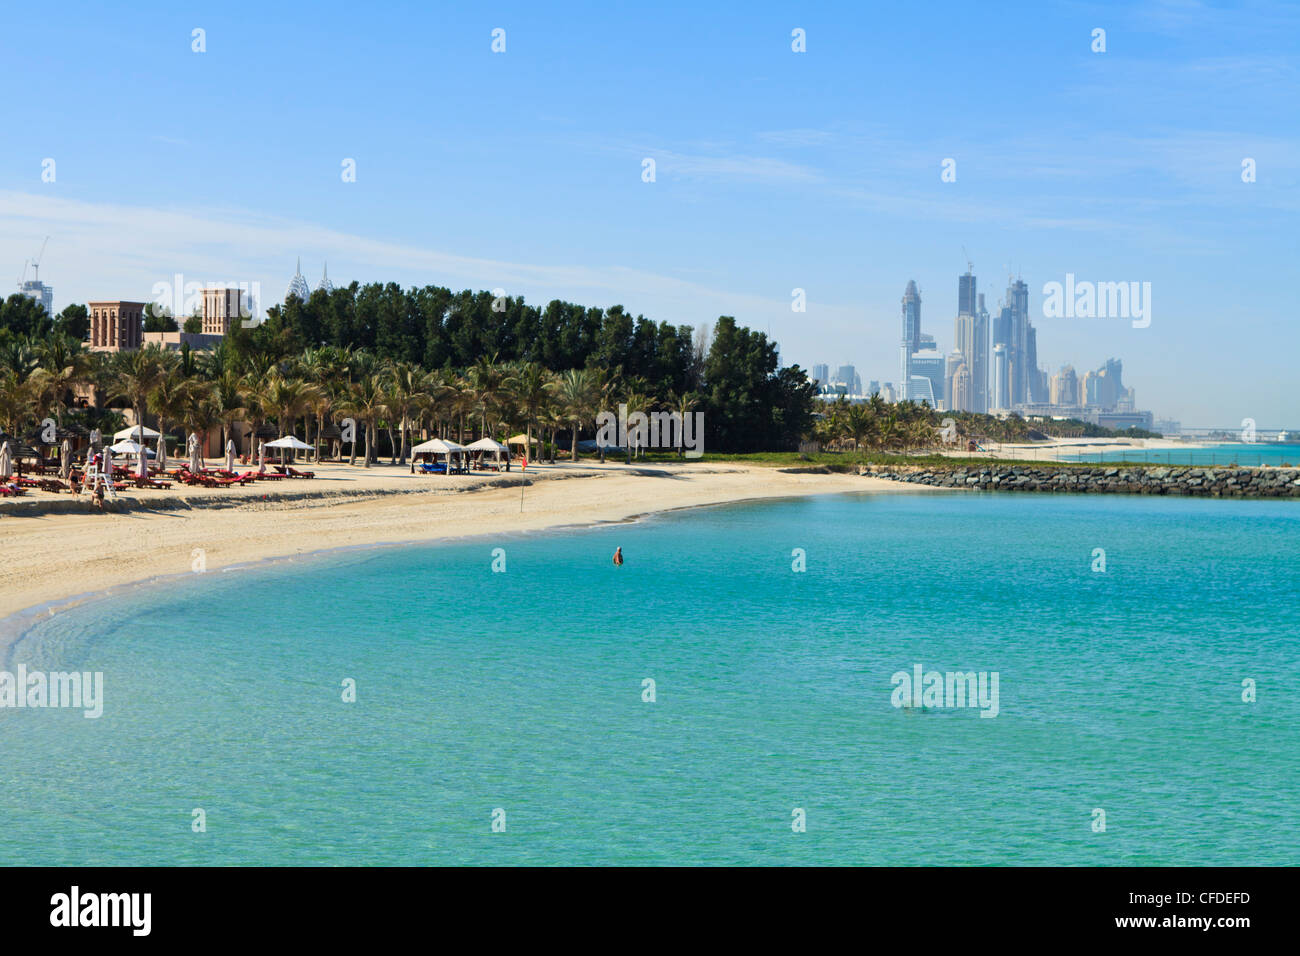 Jumeirah Beach looking towards the tall buildings of Dubai Marina, Dubai, United Arab Emirates, Middle East Stock Photo